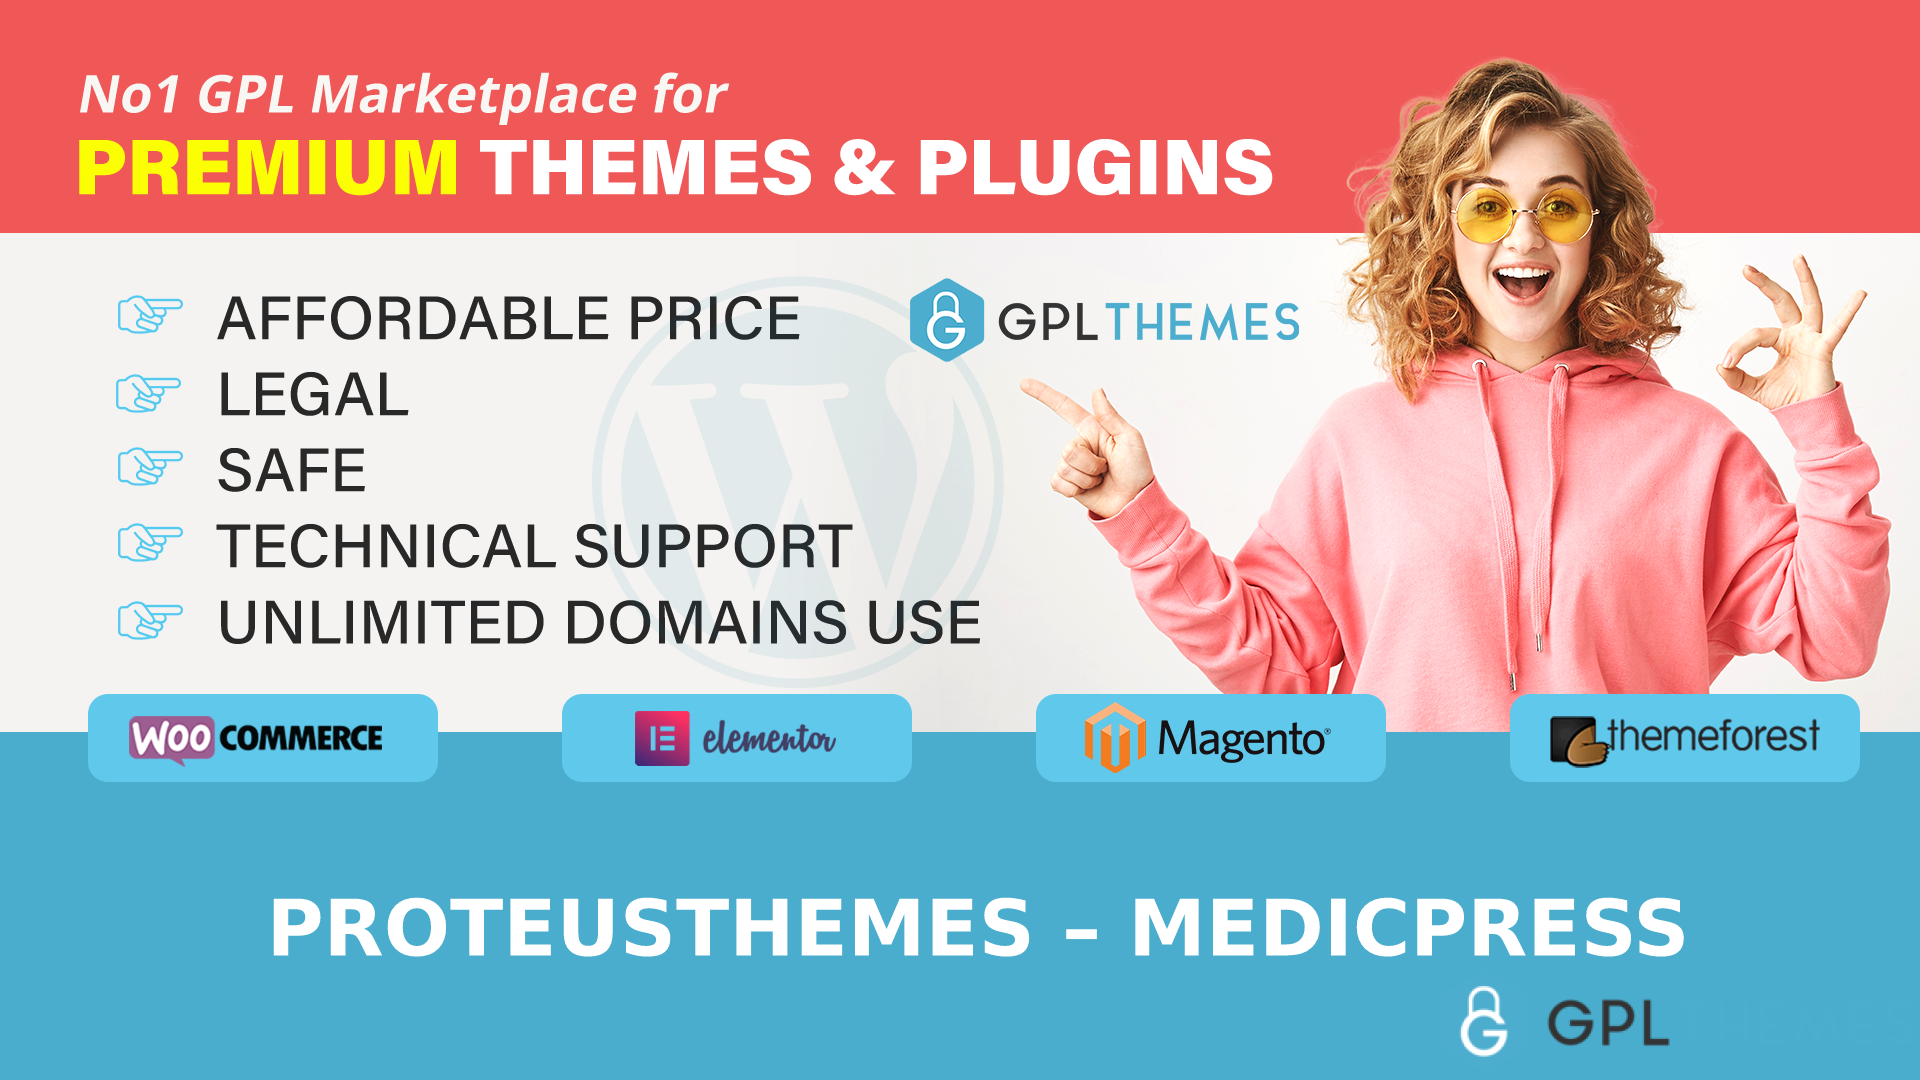 ProteusThemes – MedicPress